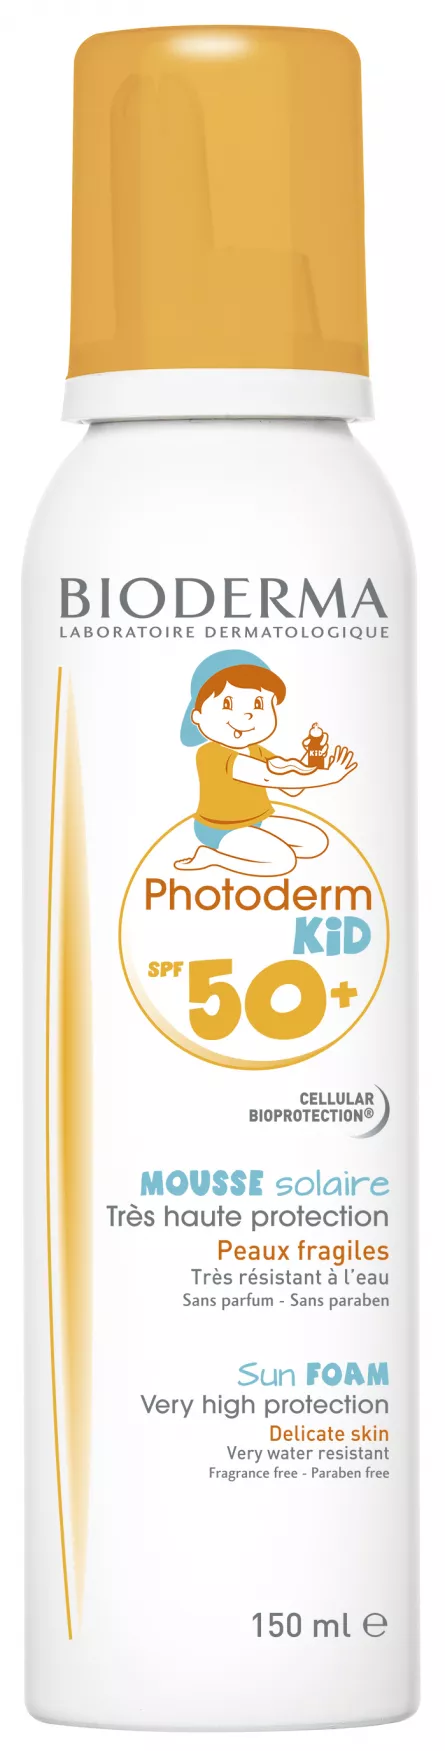 BIODERMA Photoderm Kid Spuma SPF 50+ * 150 ml, [],ivonafarm.ro